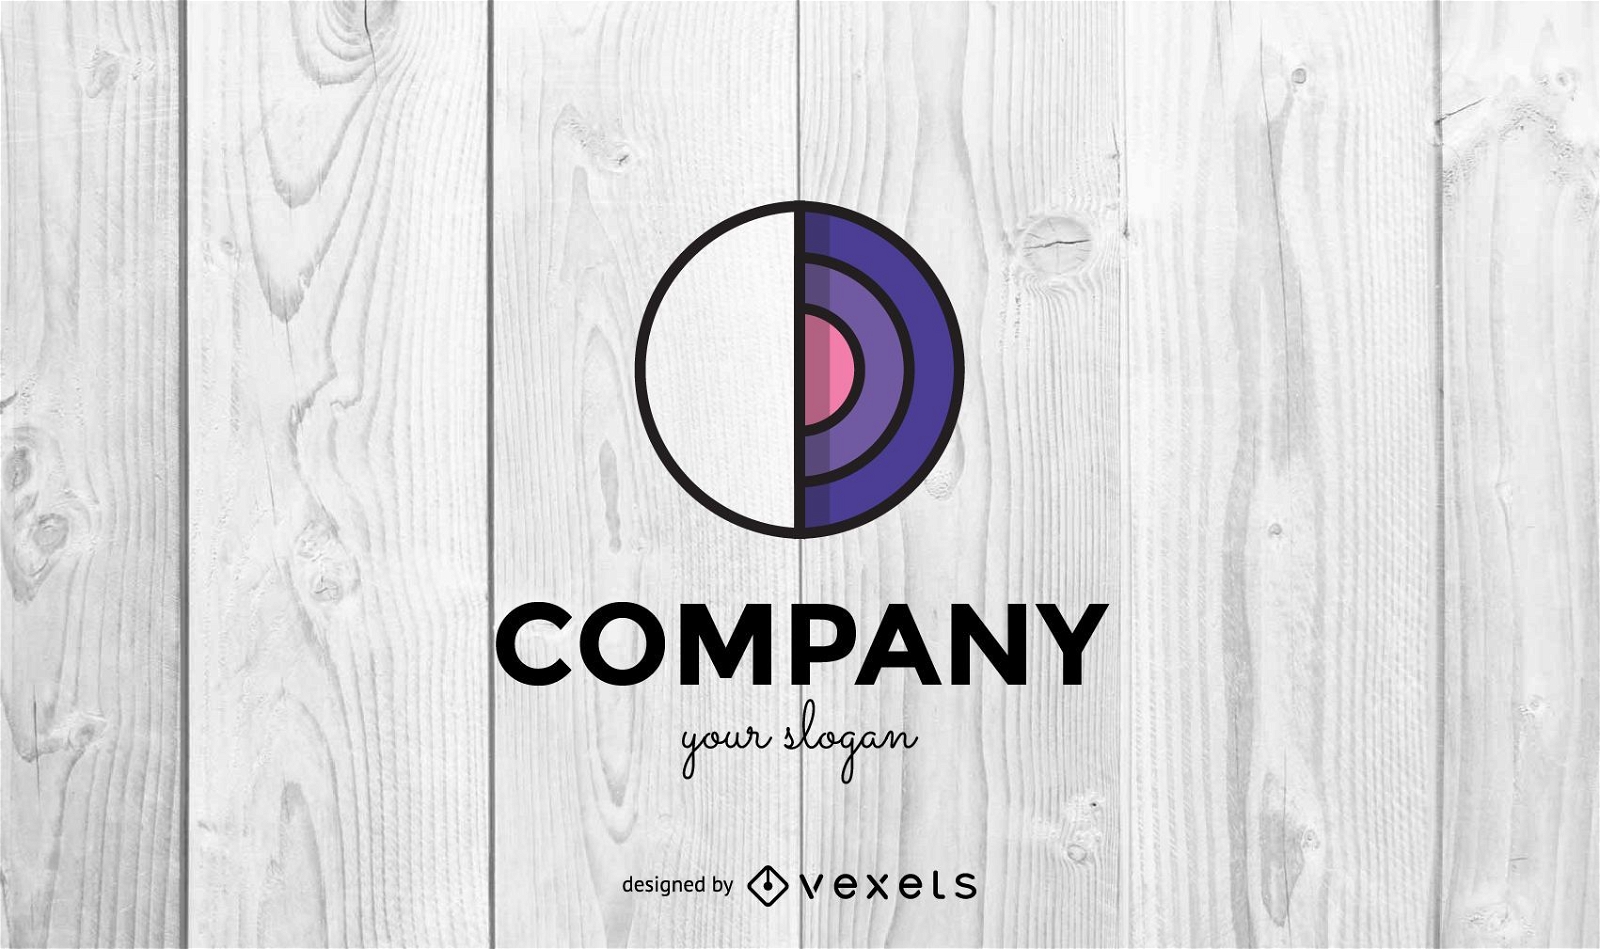 Company logo design template